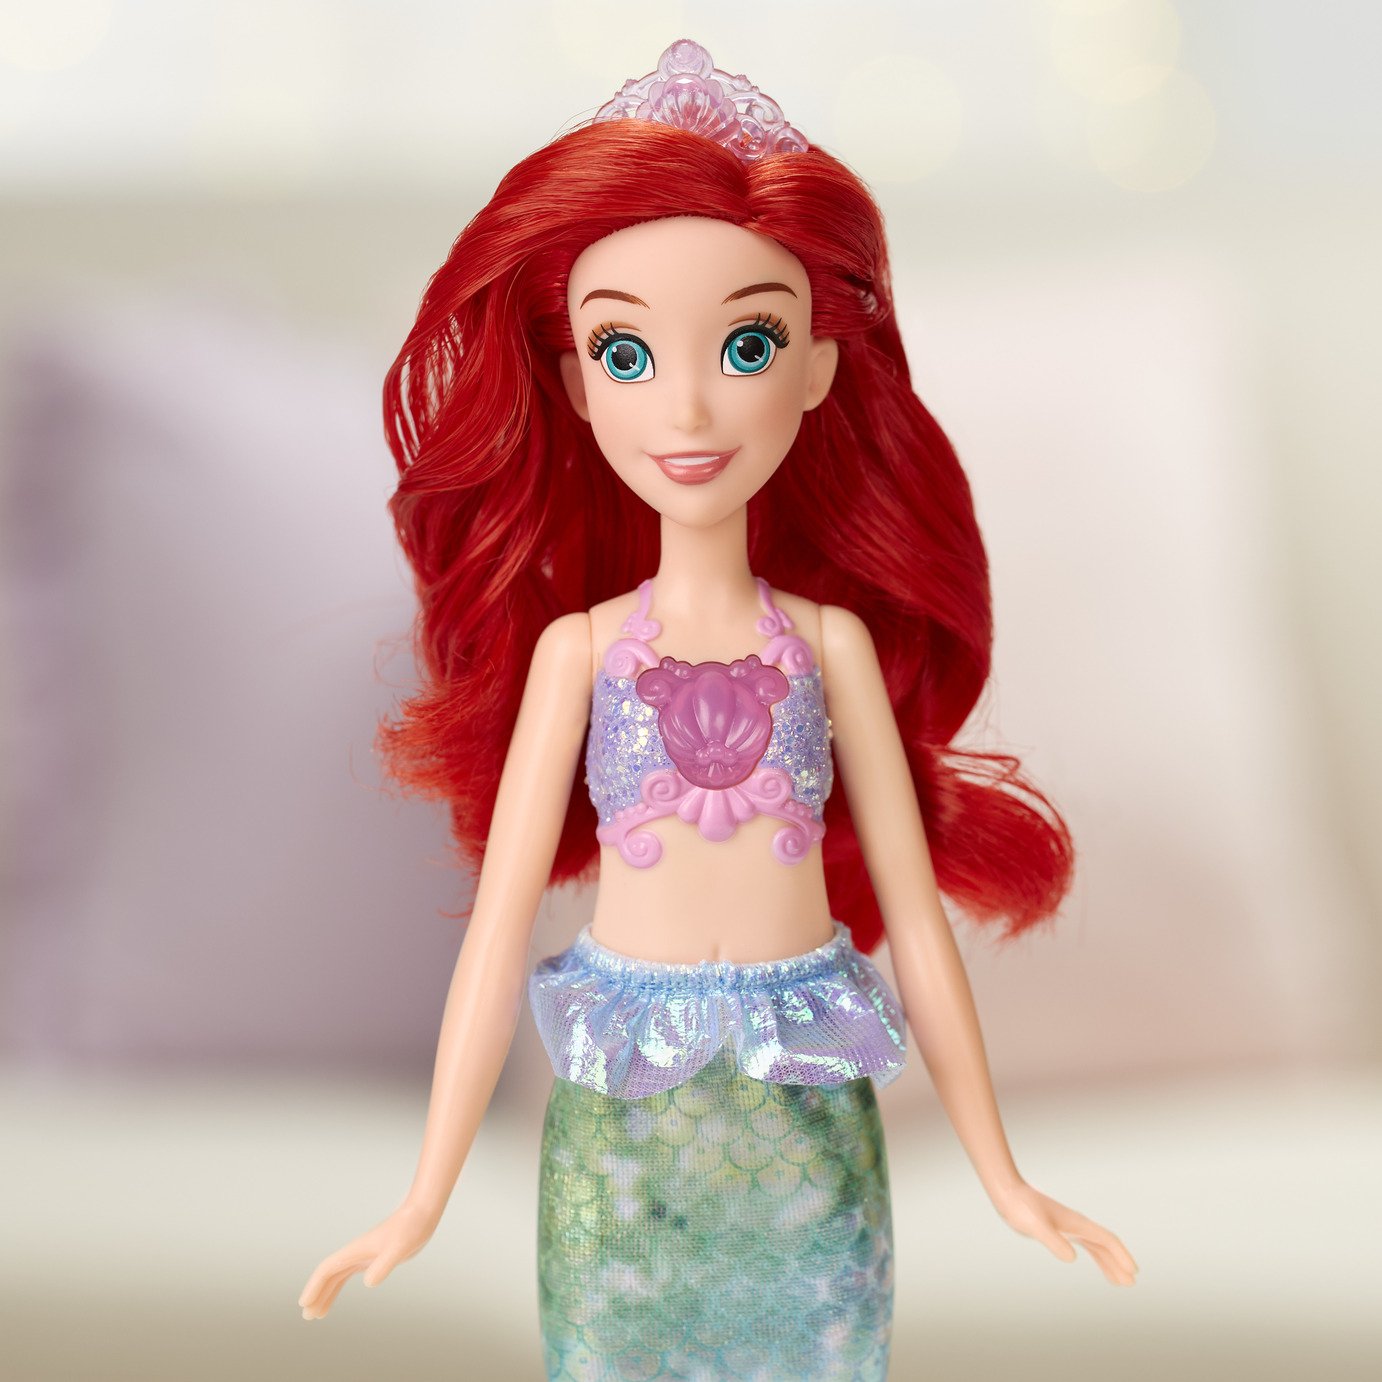 Disney Princess Singing Ariel Doll Review